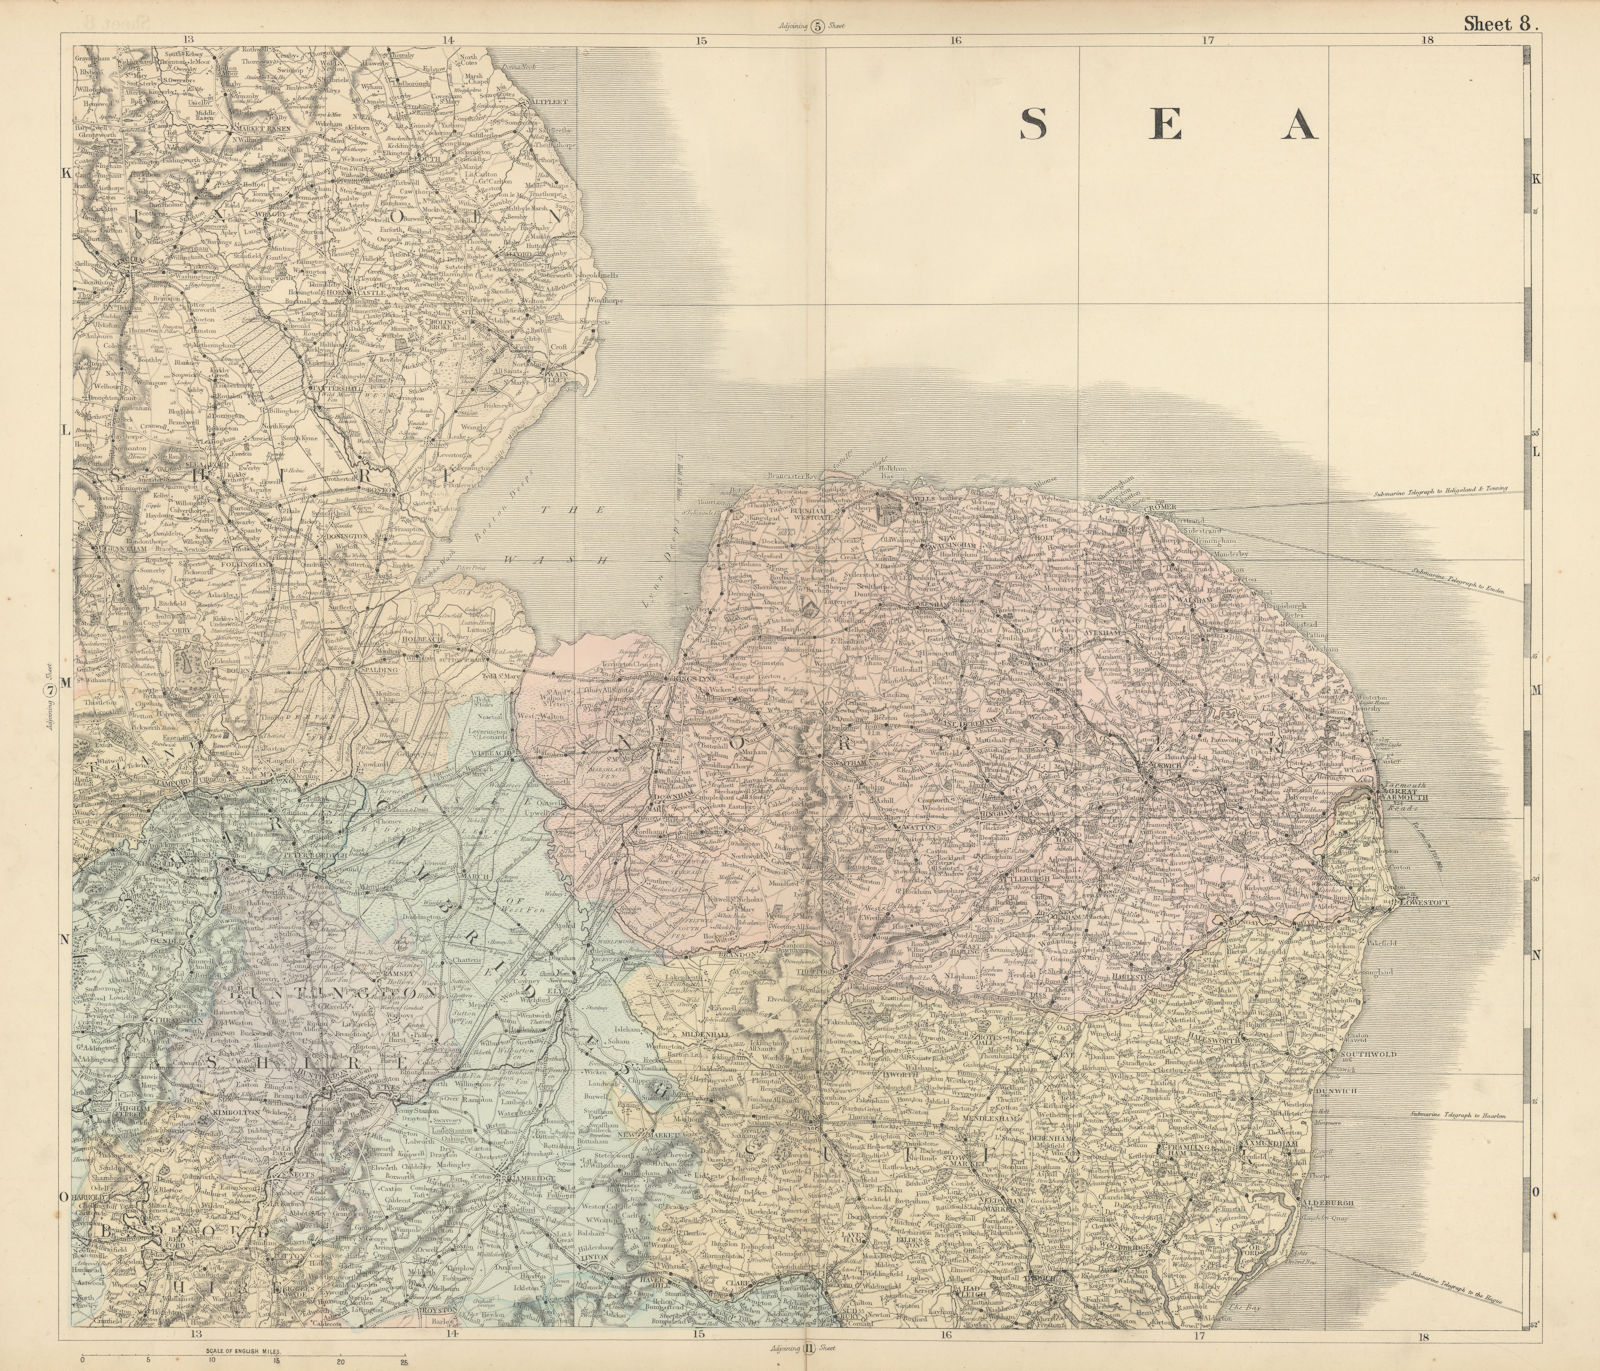 Associate Product England East. Fens East Anglia Wash Lincs Norfolk Cambridgeshire. BACON 1883 map